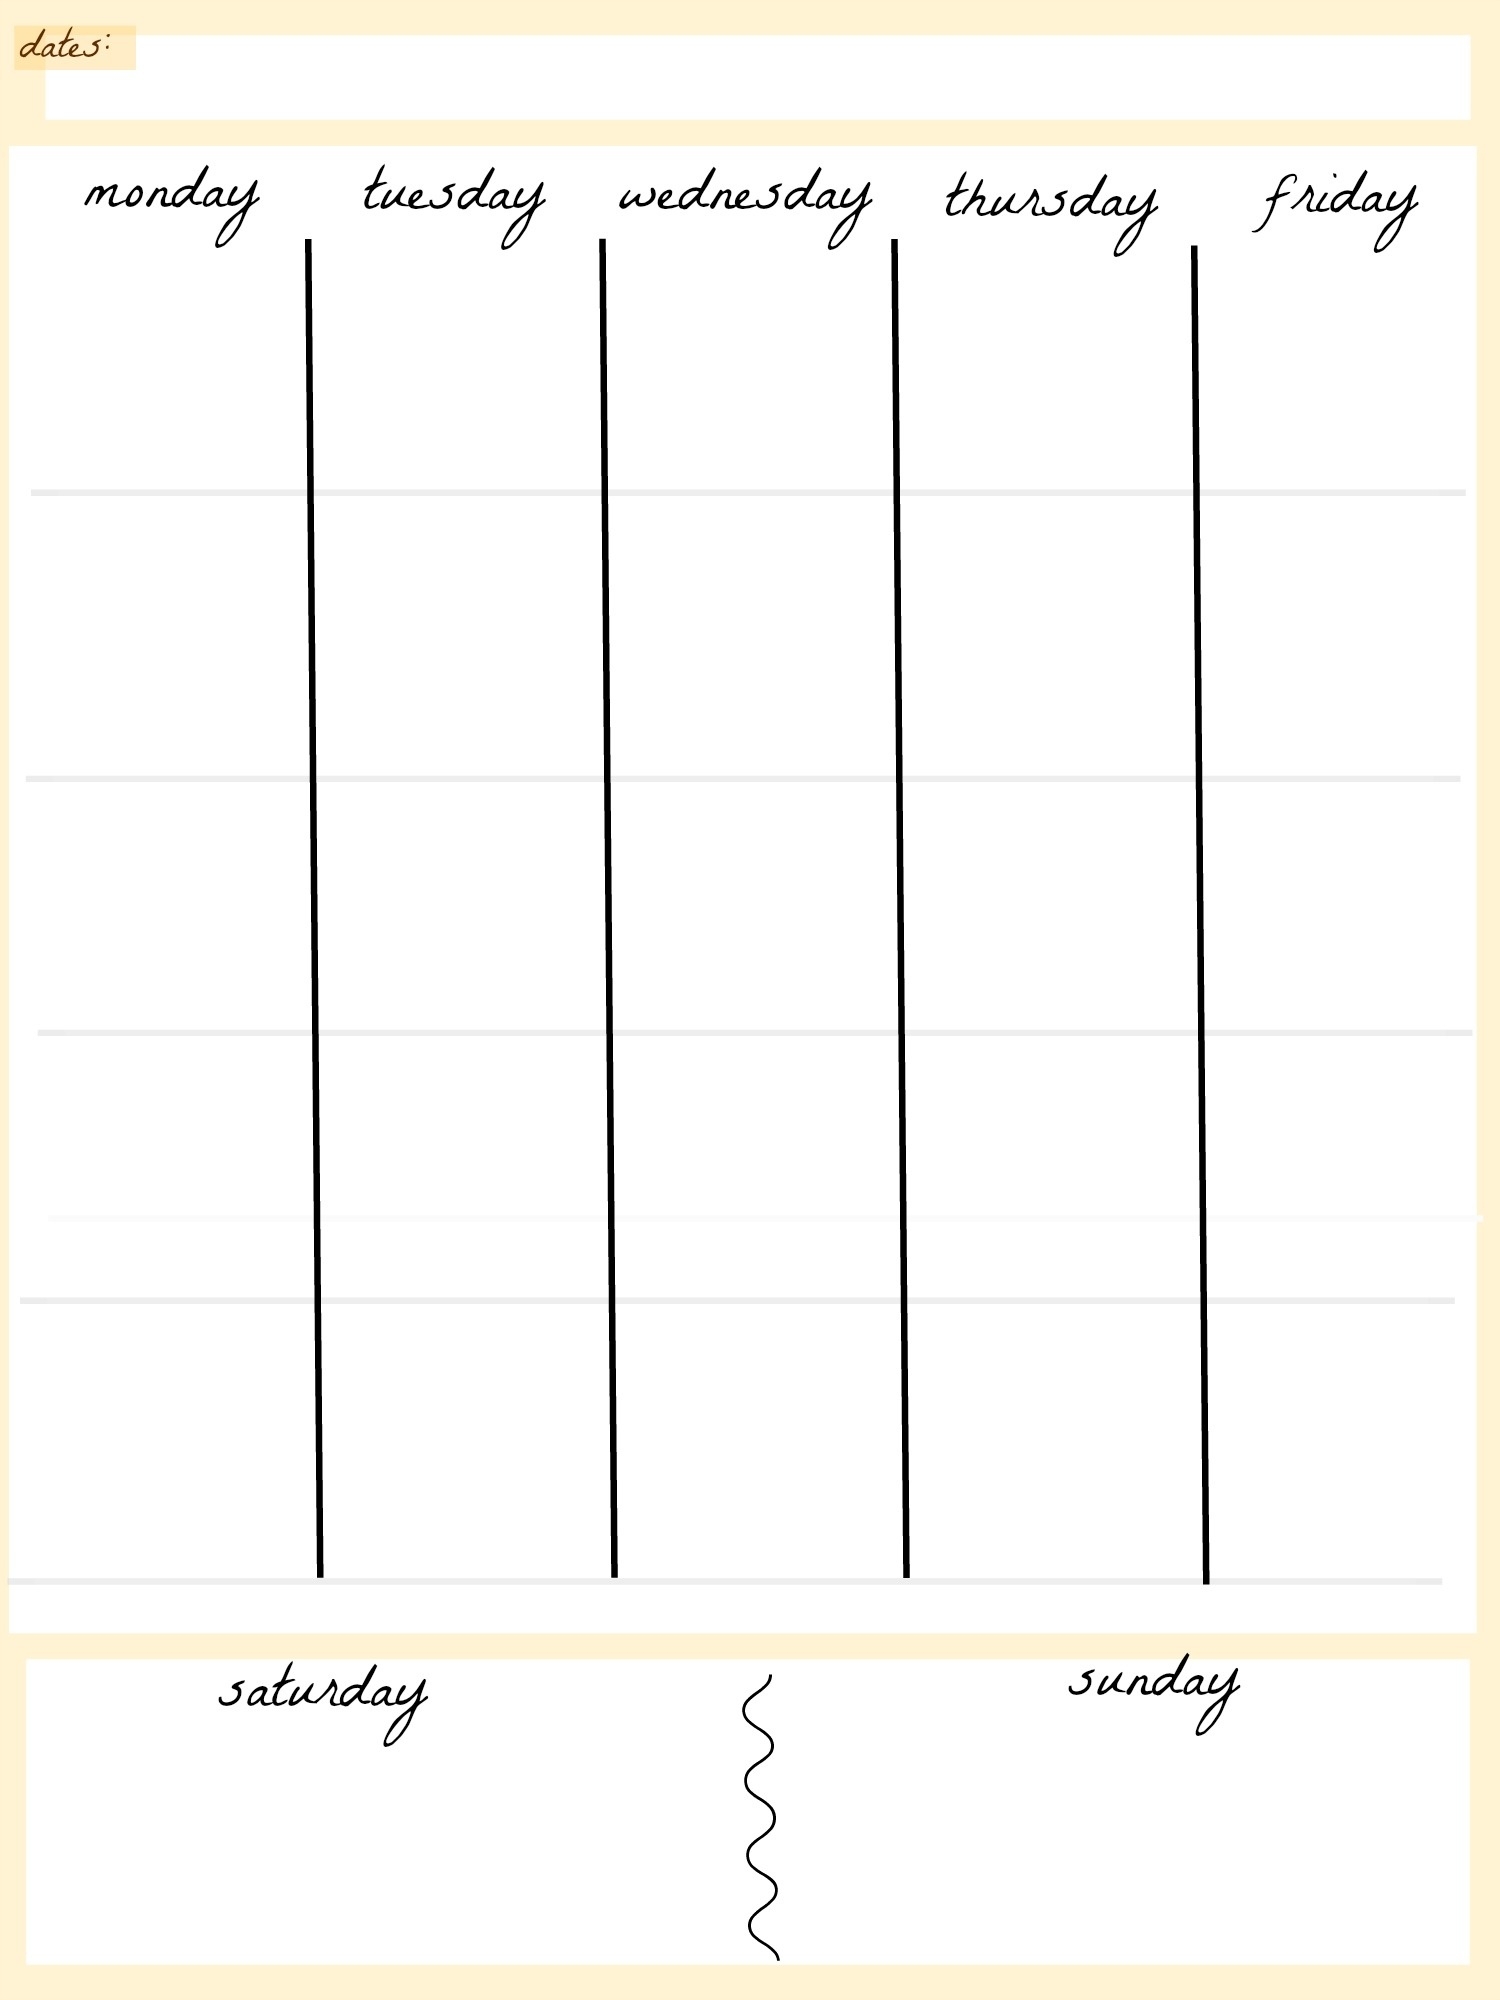 Monthly Timetable Template - Gerhard-Leixl.tk  Blank Calendar Template 5 Day